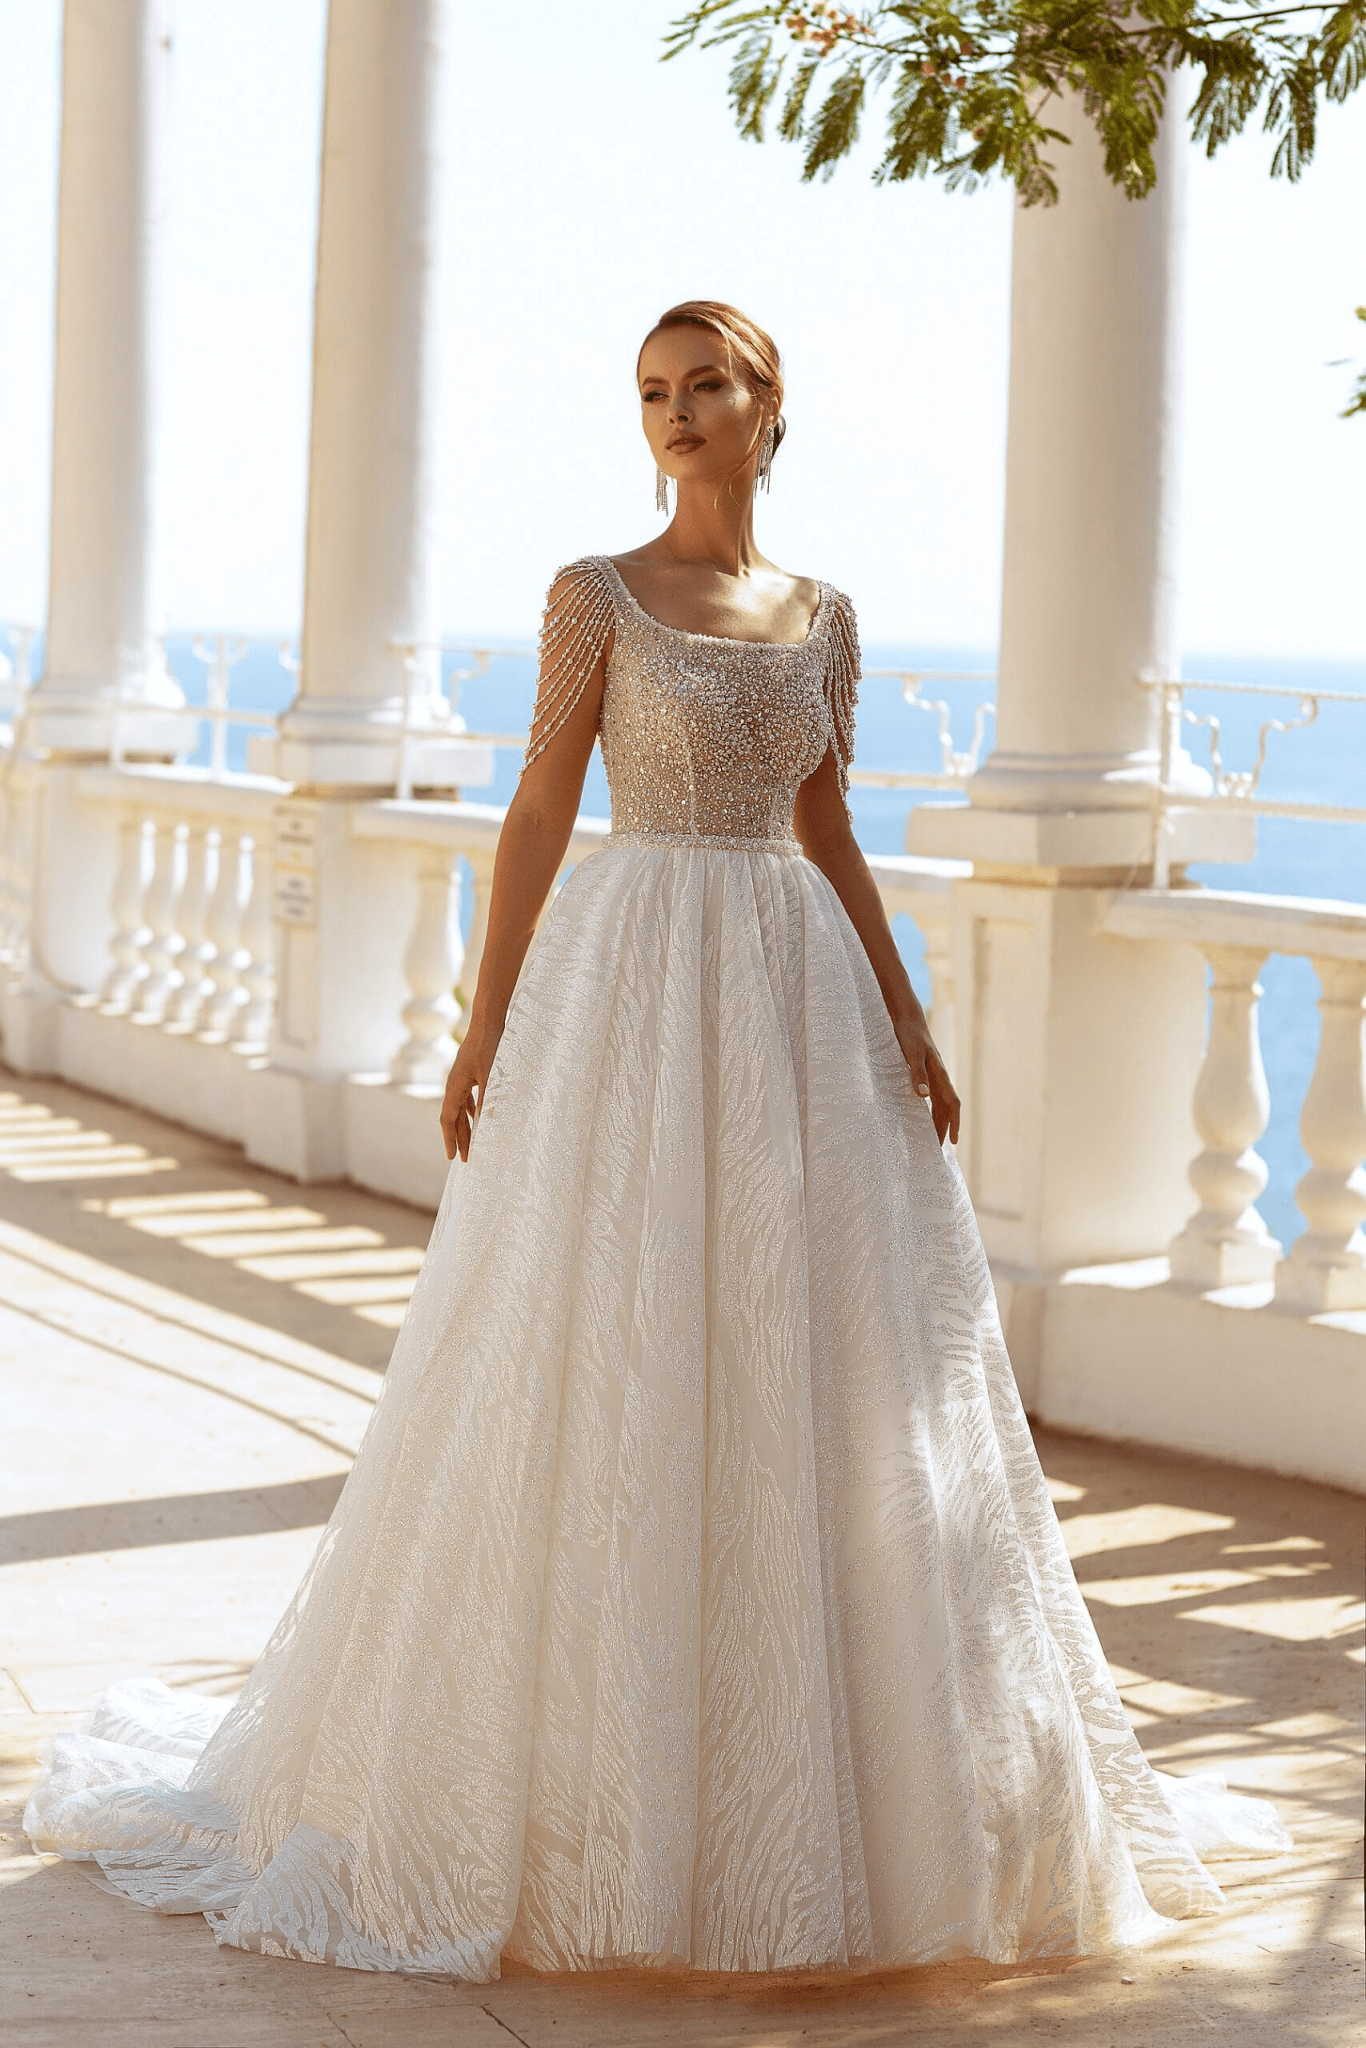 Elegant Square Neck Wedding Dress - Pearl Beads for Wedding Dress - Aline Ball Gown Wedding Dress Plus Size - WonderlandByLilian